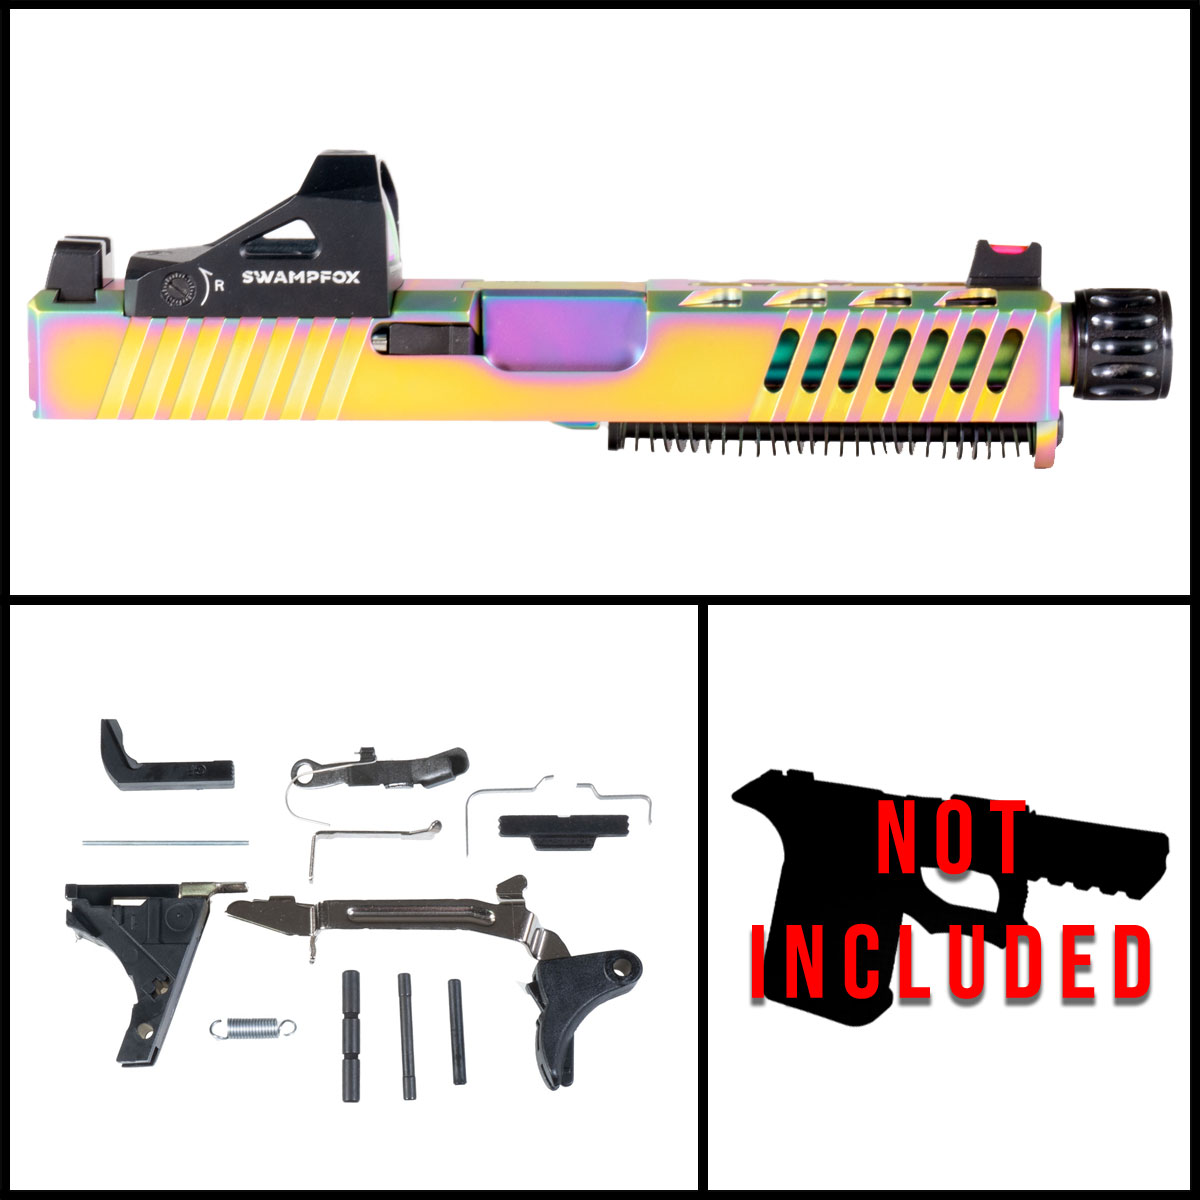 MMC 'Lumina w/ Swampfox Justice RMR' 9mm Full Pistol Build Kits (Everything Minus Frame) - Glock 19 Gen 1-2 Compatible